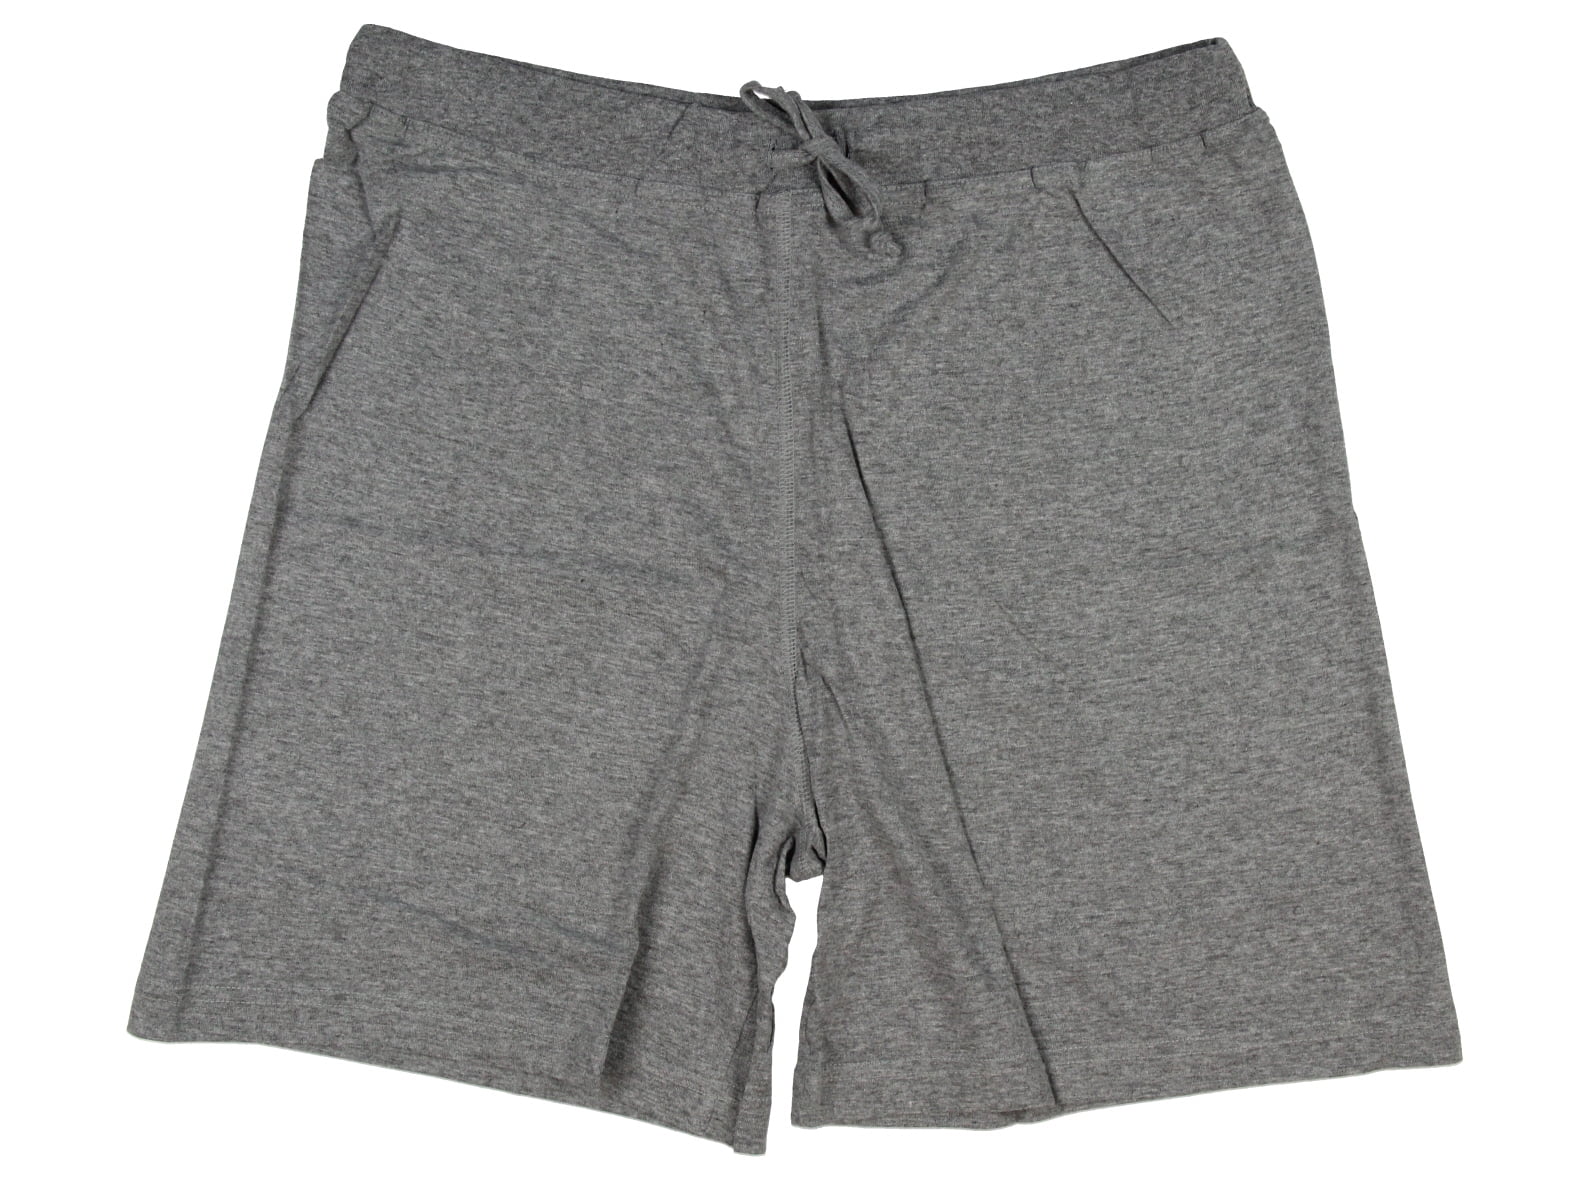 Intimo Men's Grey Pajama Short Jam Shorts - Walmart.com